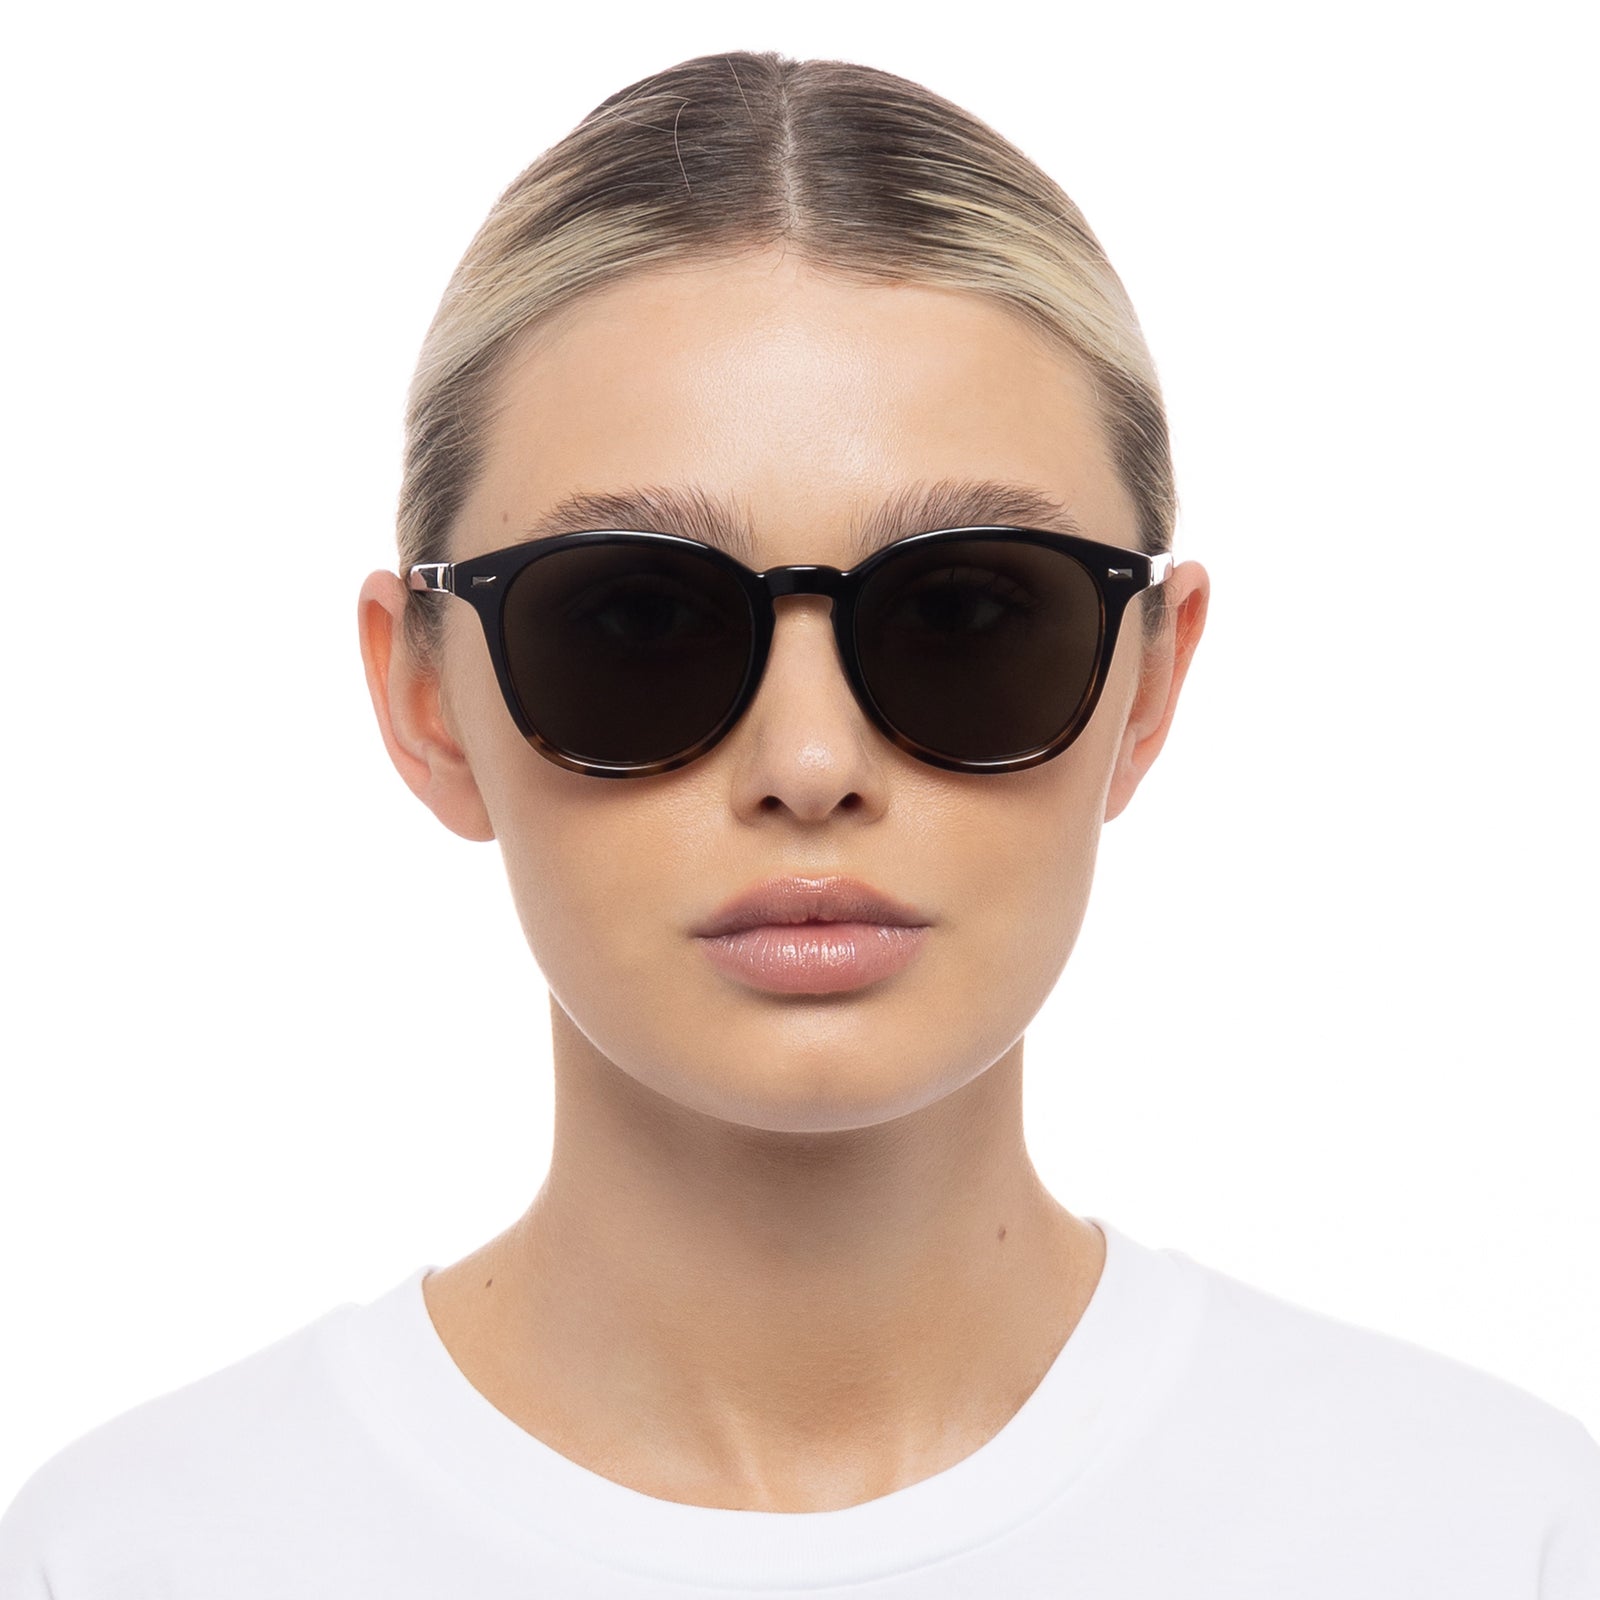 Bandwagon Tort Sunglasses Round Le Specs Uni-Sex Black |